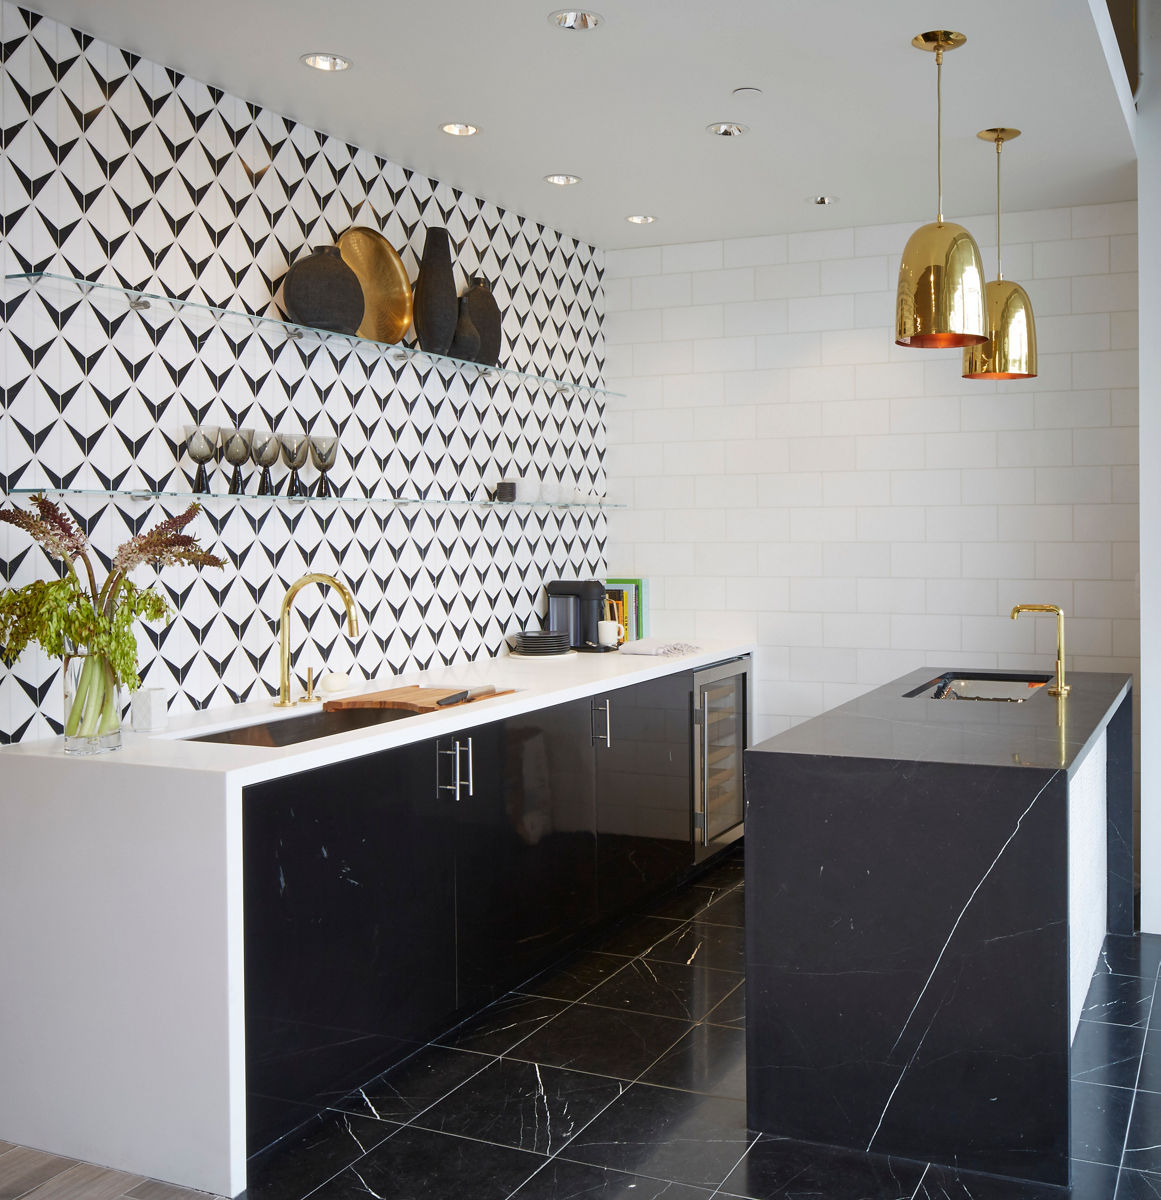 Ann Sacks Austin tile showroom interior view of modern kitchen design with mosaic tile backsplash and black stone island